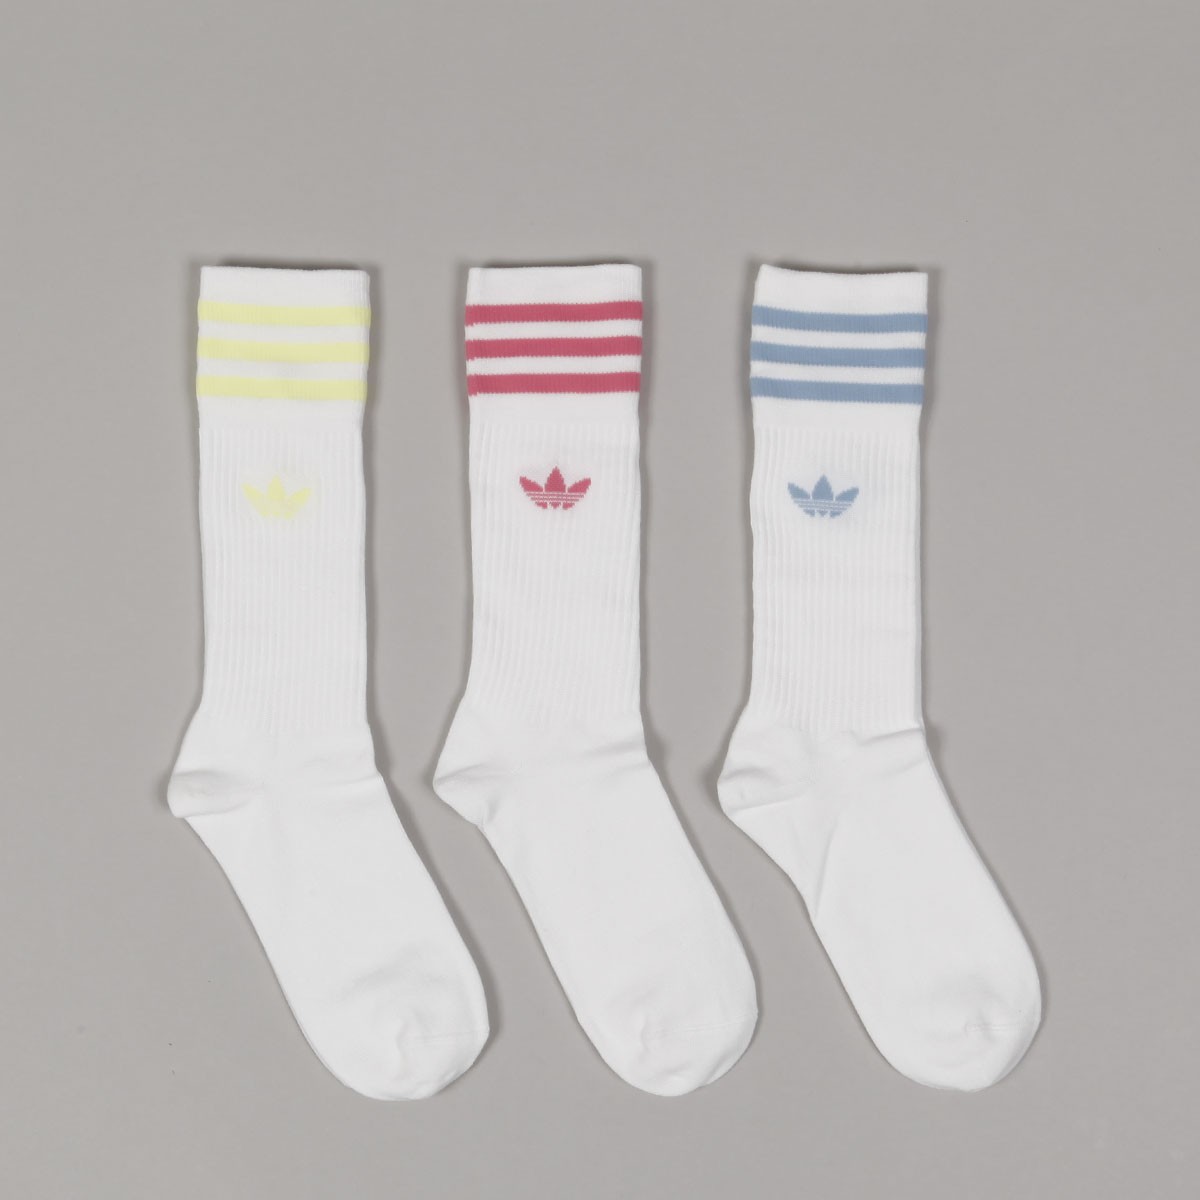 Adidas 3Pack Solid Crew Socks Yellow Rose Sky - Skateboarding, Nike SB ...